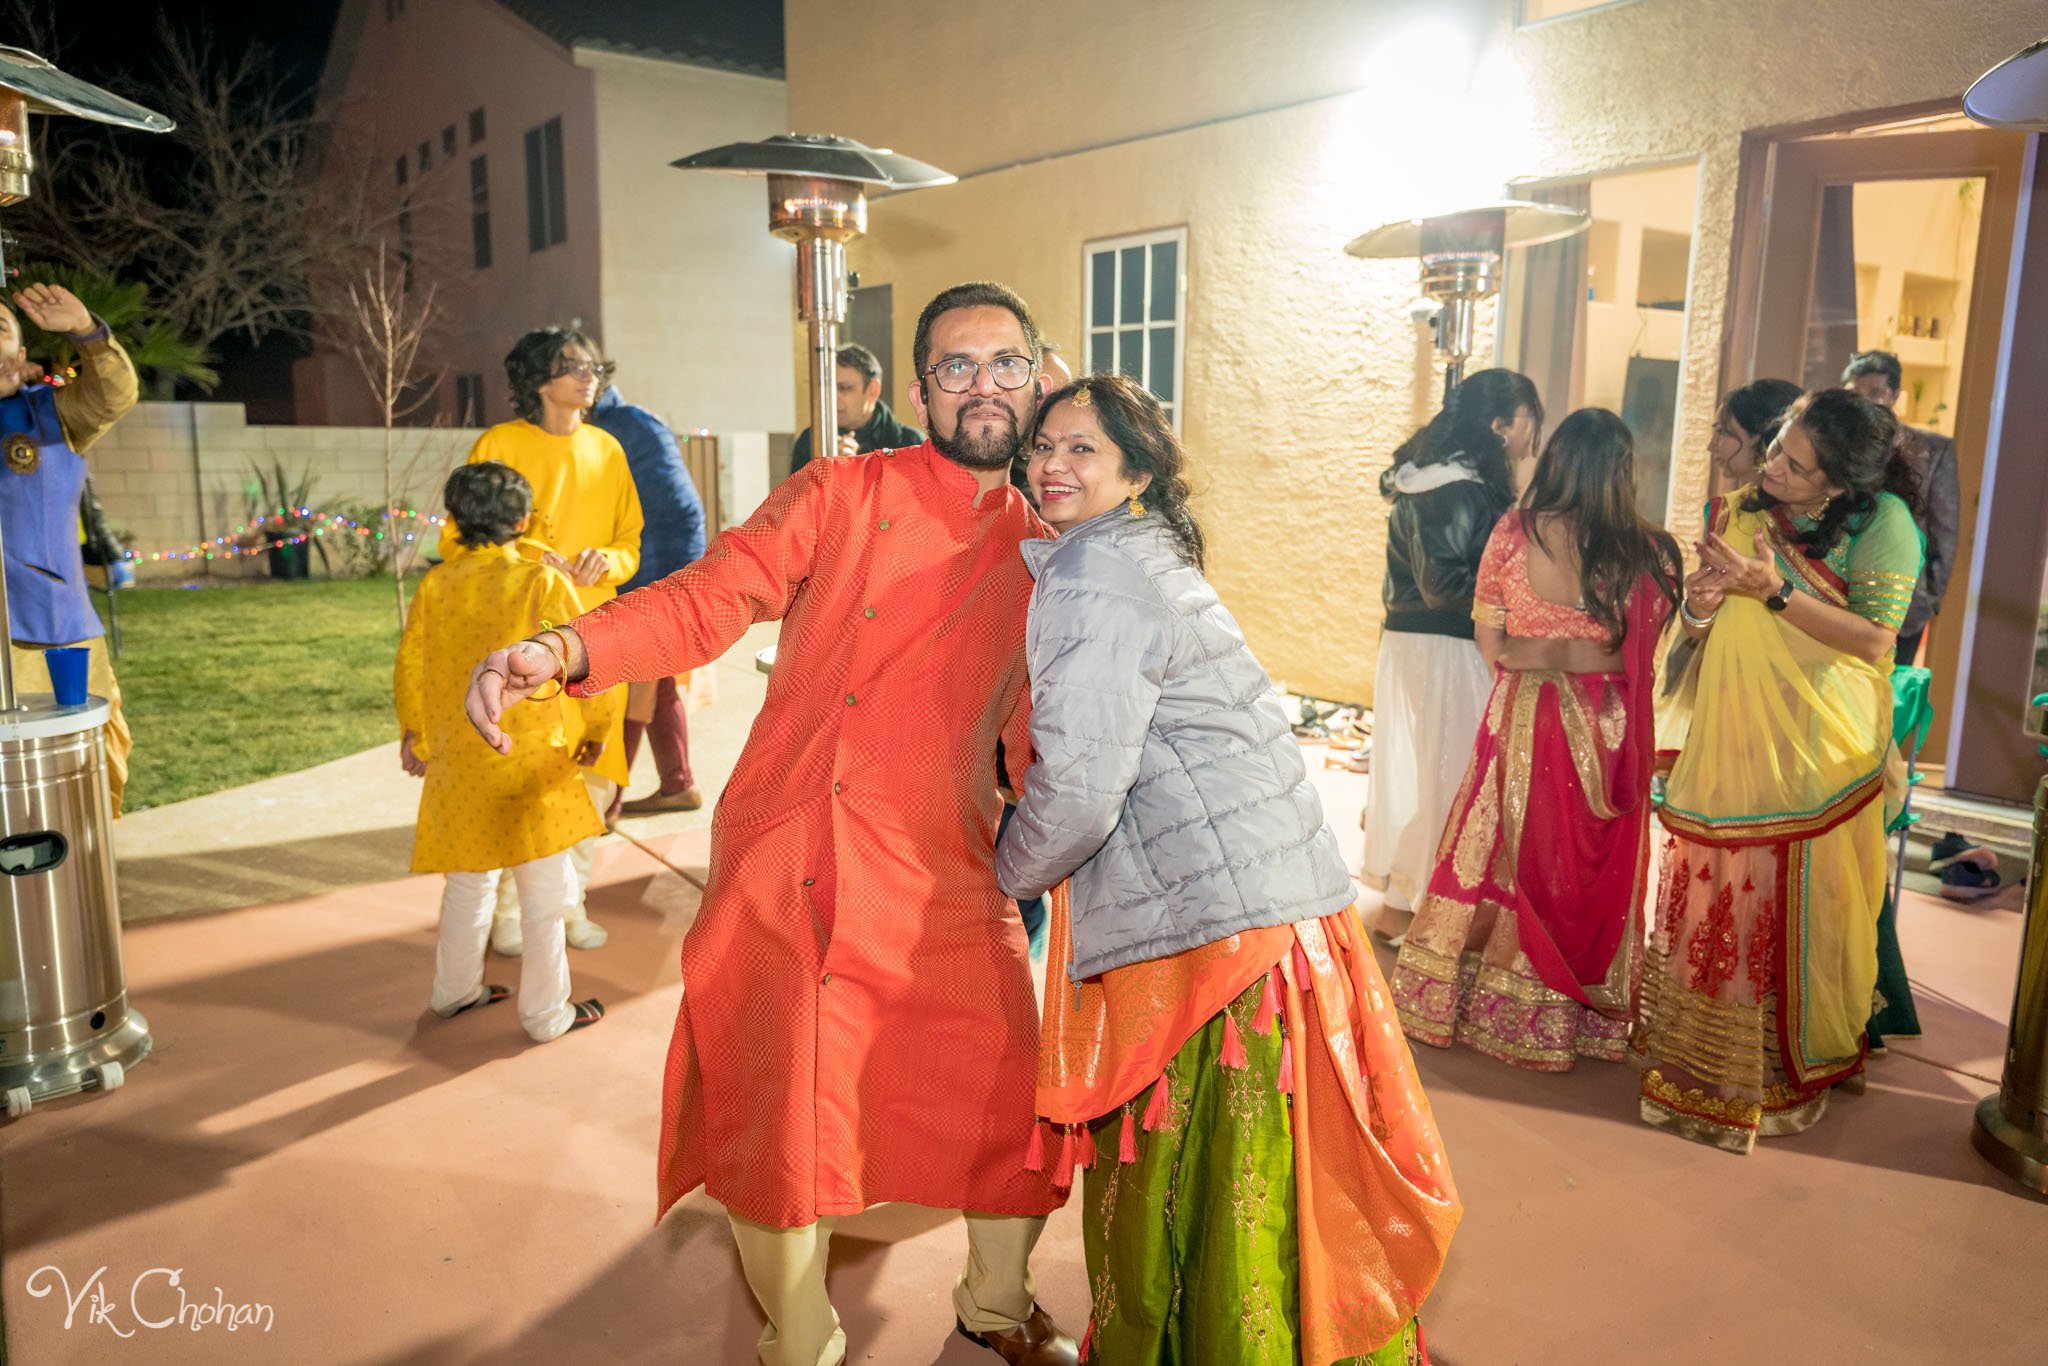 2022-02-04-Hely-&-Parth-Garba-Night-Indian-Wedding-Vik-Chohan-Photography-Photo-Booth-Social-Media-VCP-194.jpg